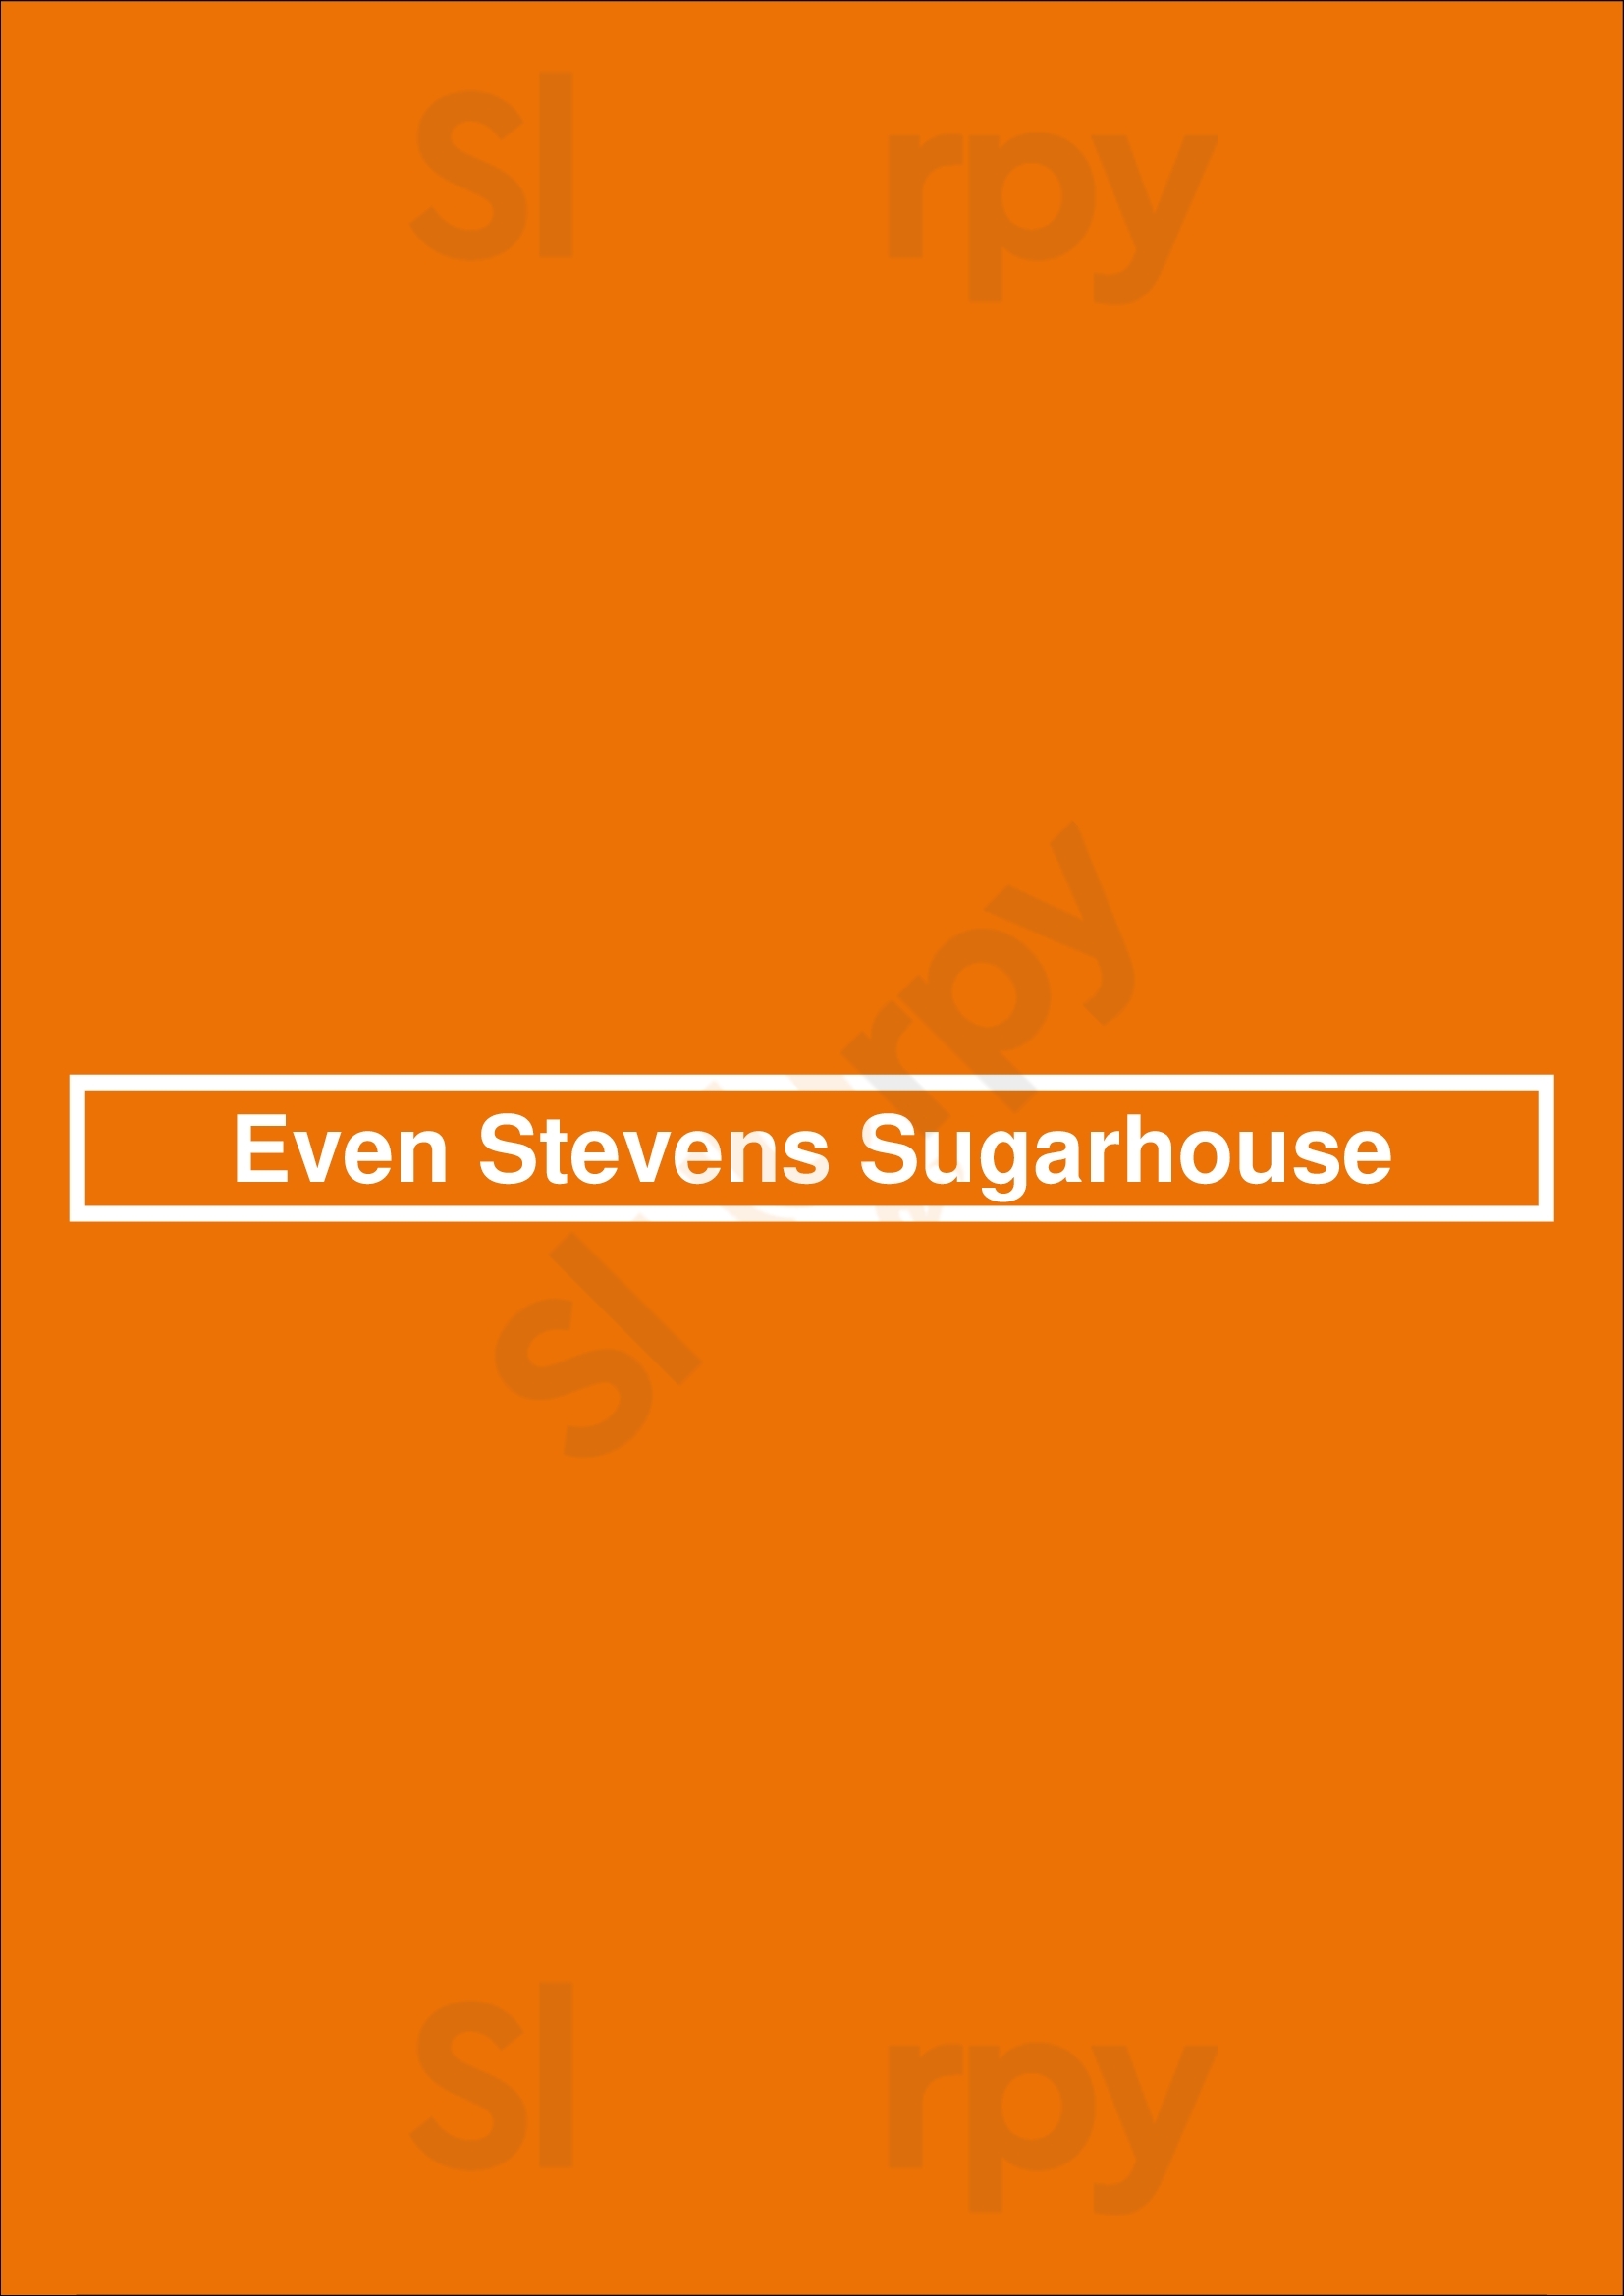 Even Stevens Sugarhouse Salt Lake City Menu - 1